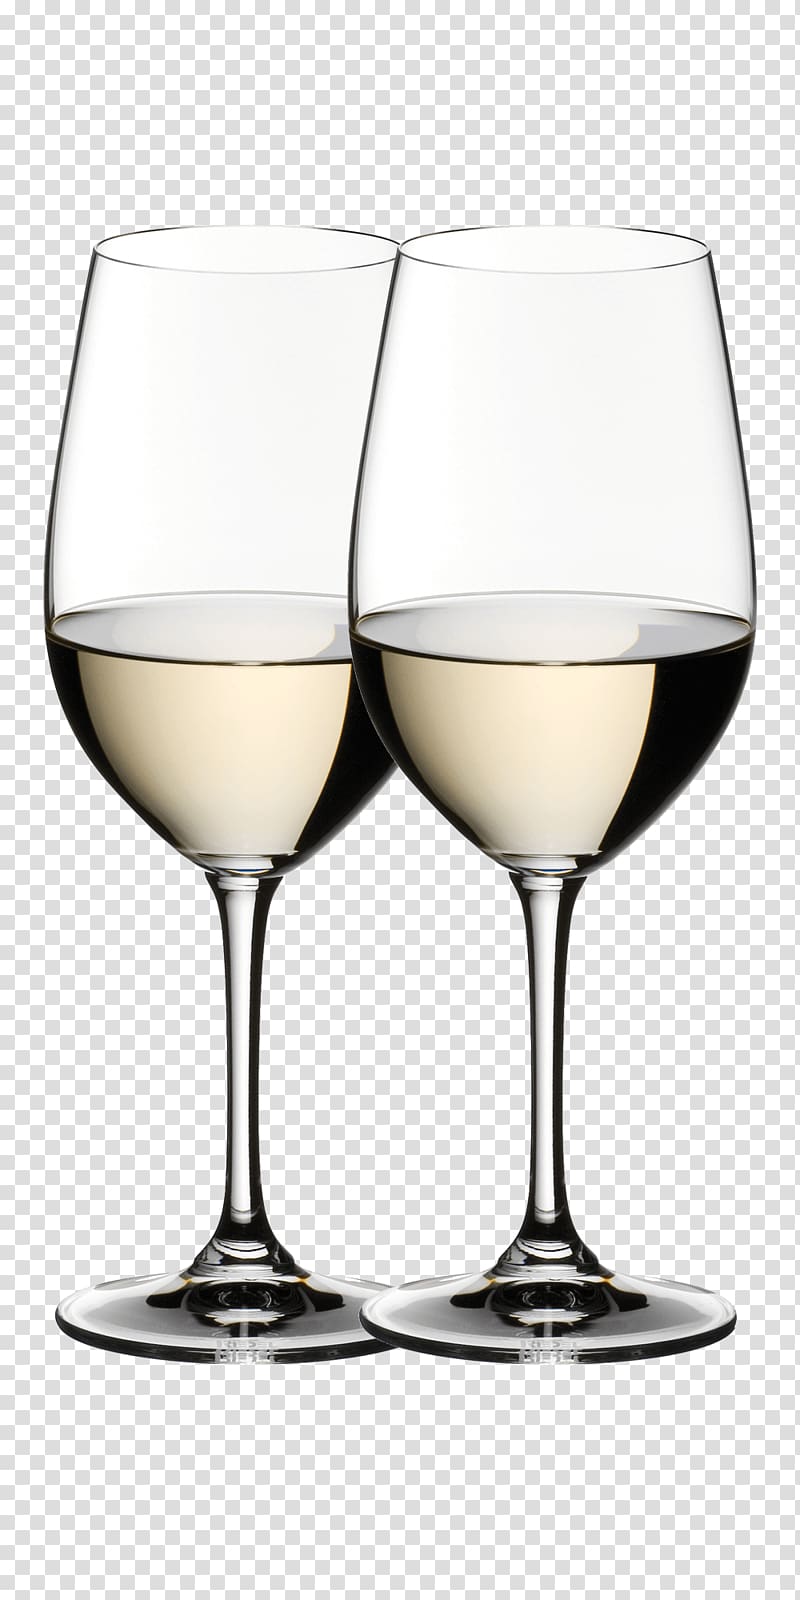 Wine Riesling Zinfandel Chianti DOCG Sauvignon blanc, wine transparent background PNG clipart